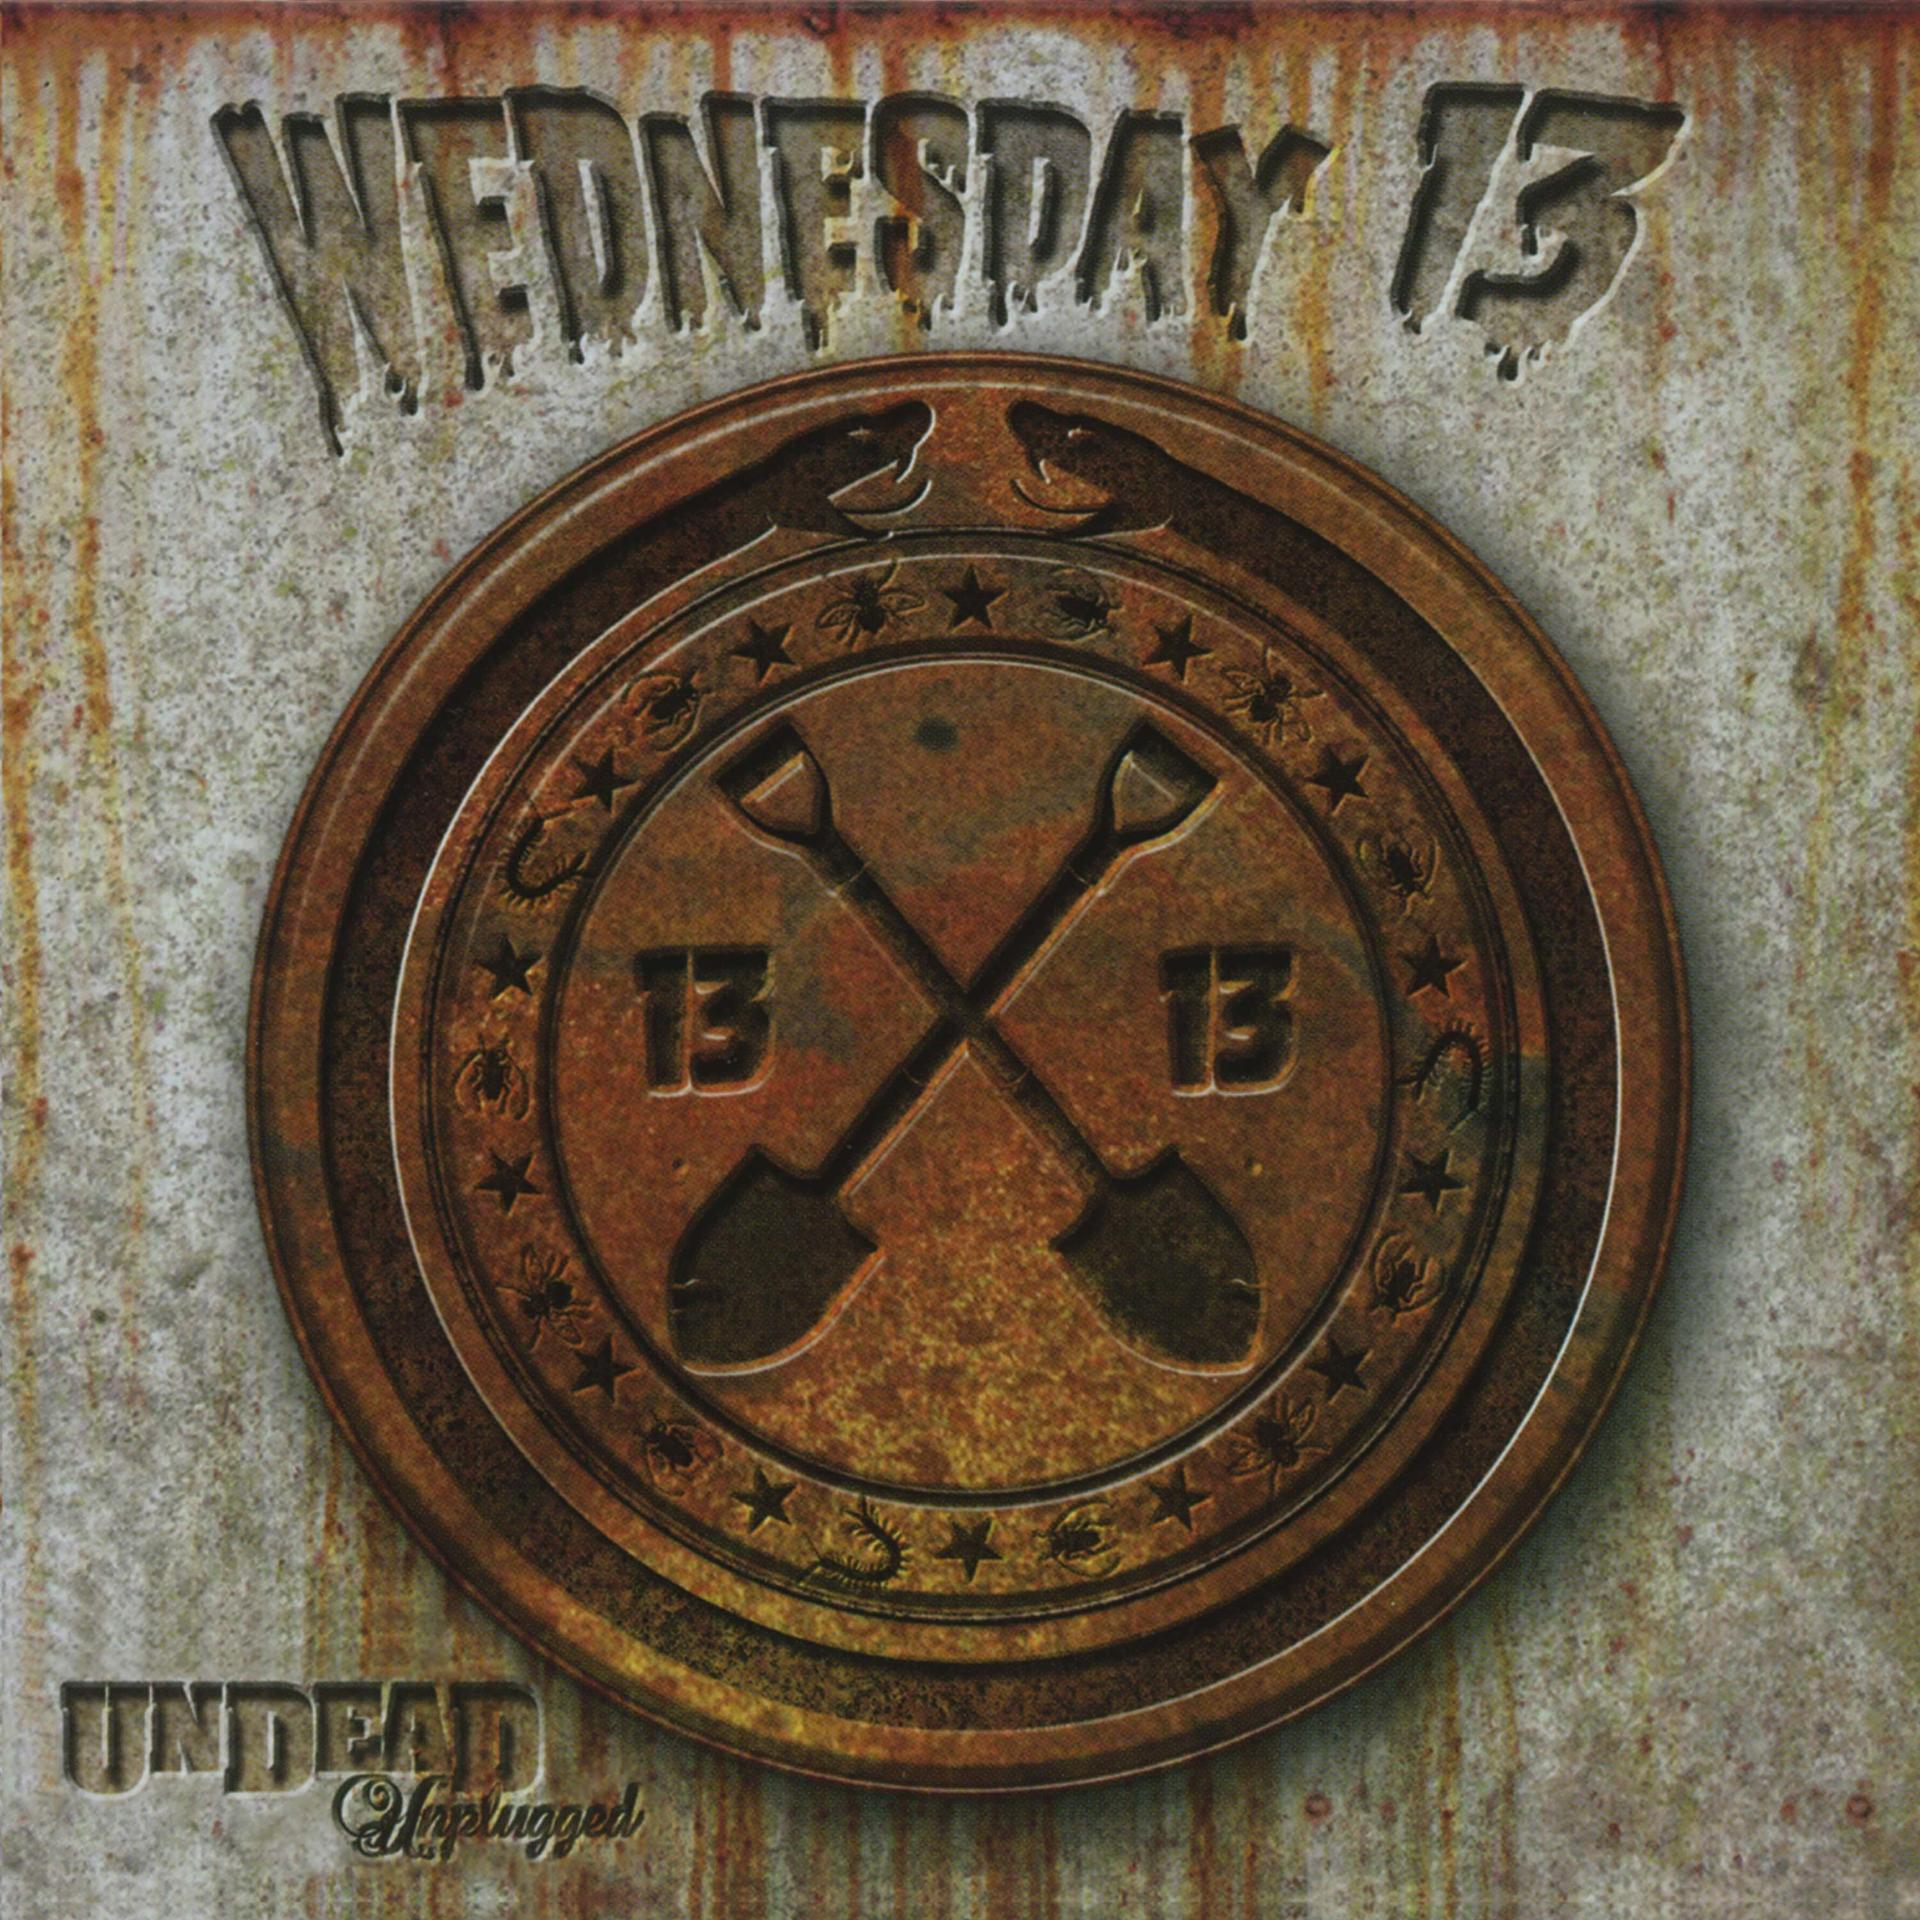 Wednesday 13 - Undead Unplugged (Vinyl) 